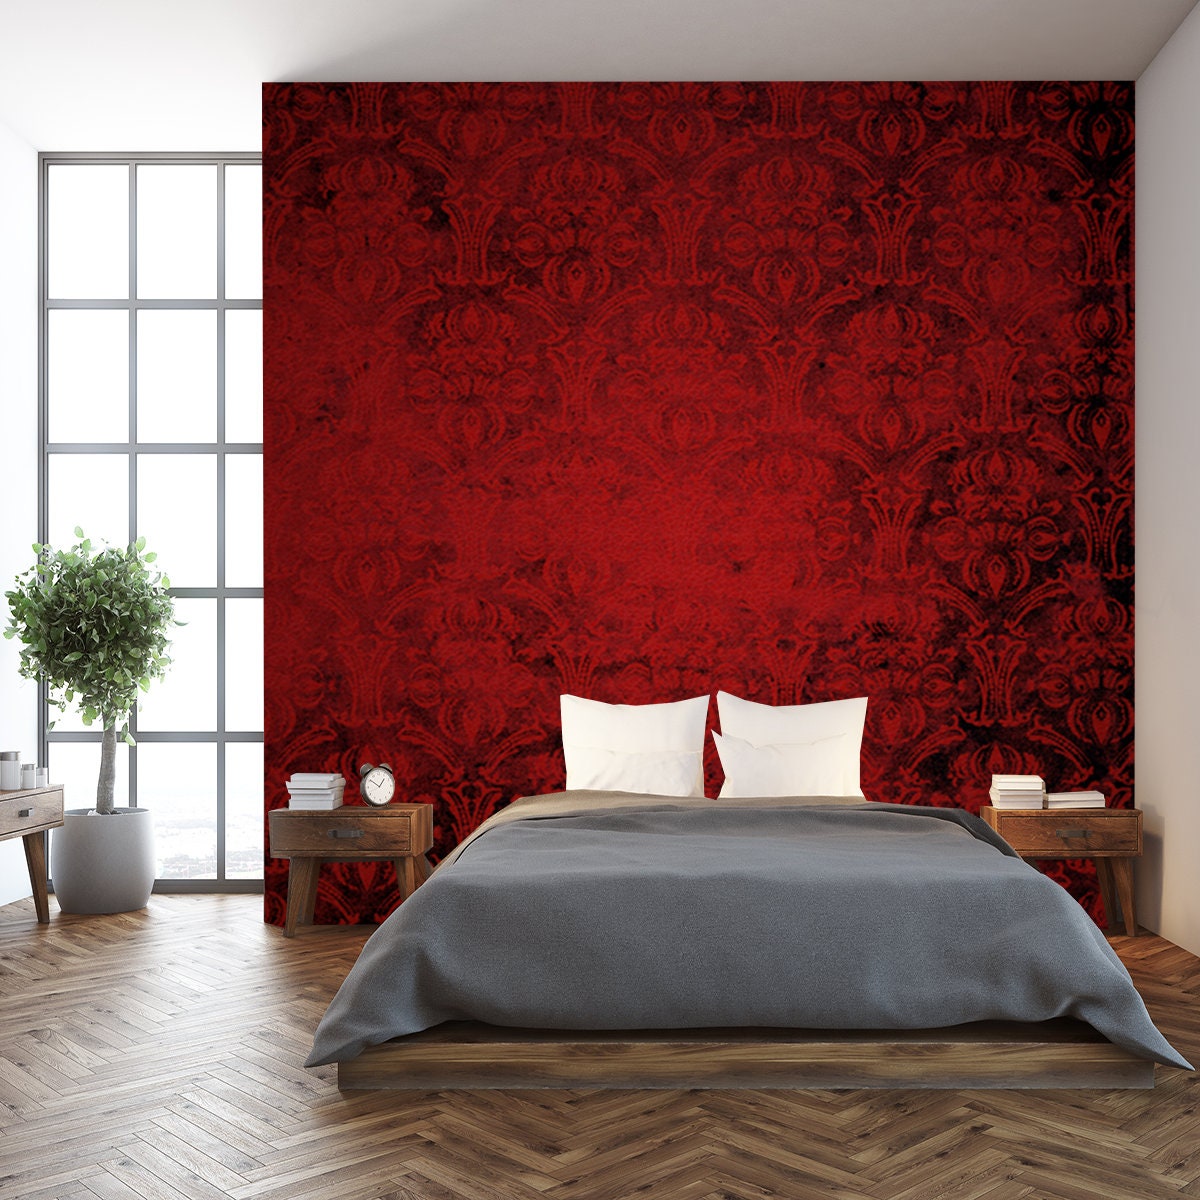 Red Grunge Seamless Ornamental Wallpaper, Floral Pattern Wallpaper Bedroom Mural